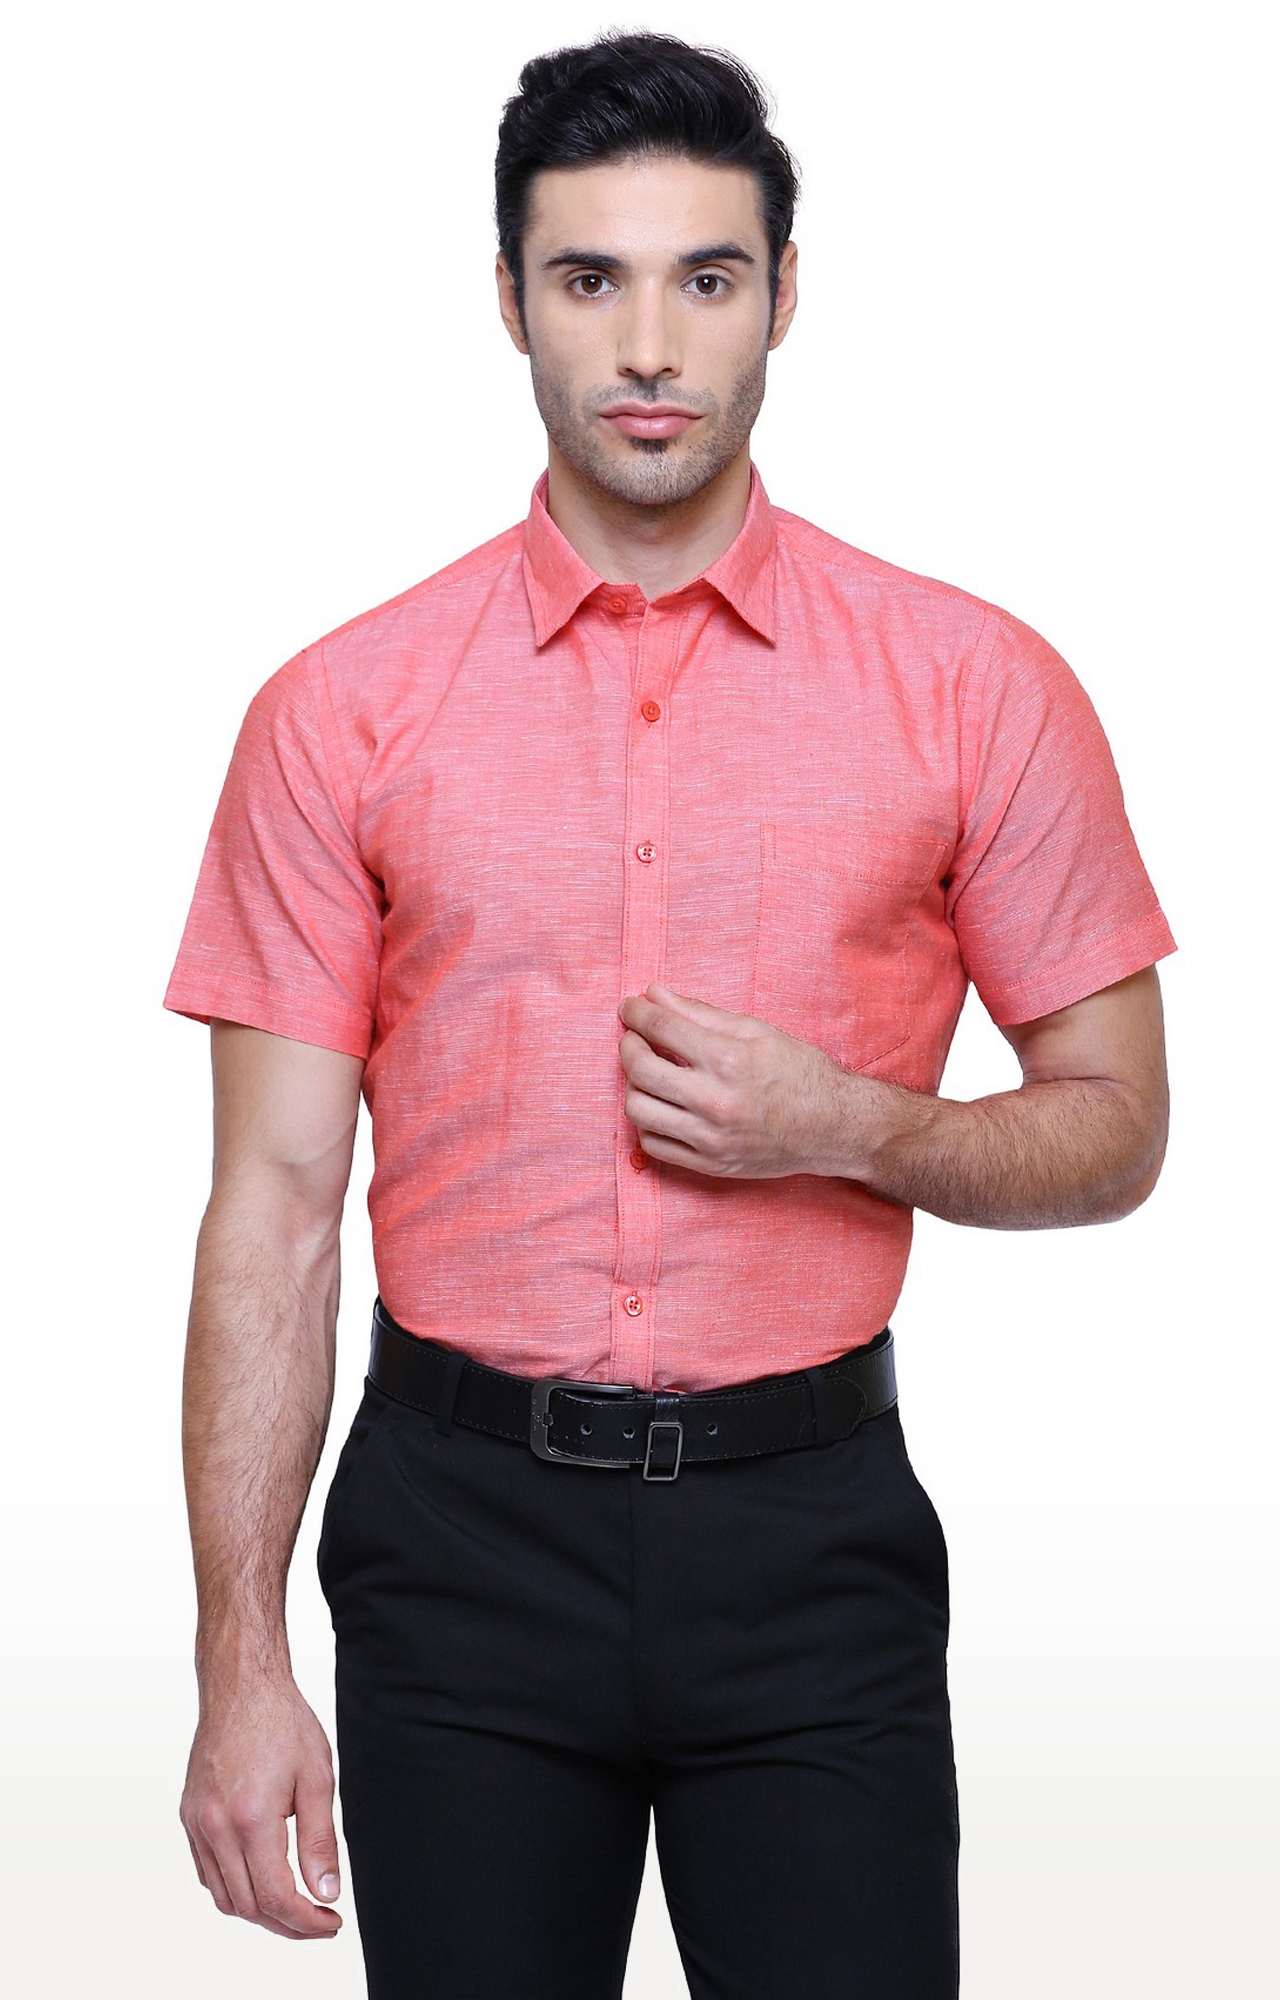 Southbay | Southbay Men's Salmon Pink Half Sleeve Linen Cotton Formal Shirt